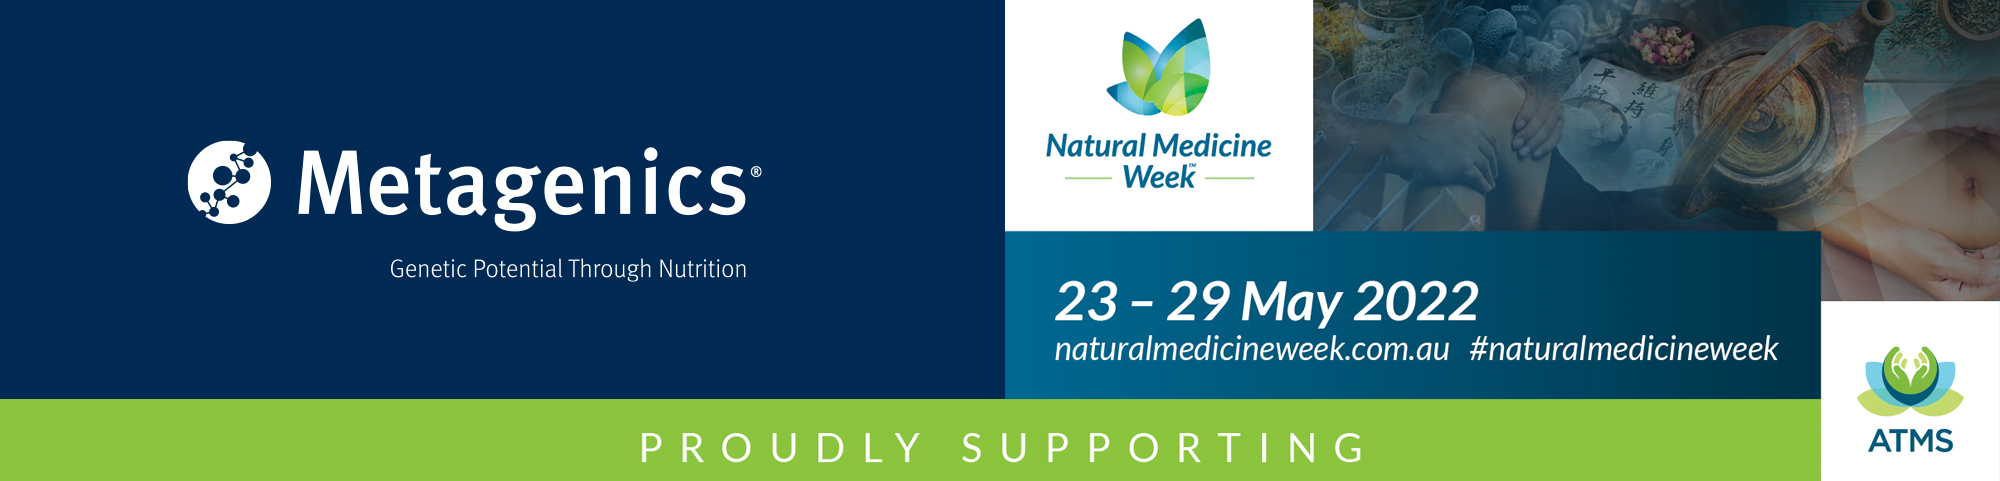 Natural Medicine Week 